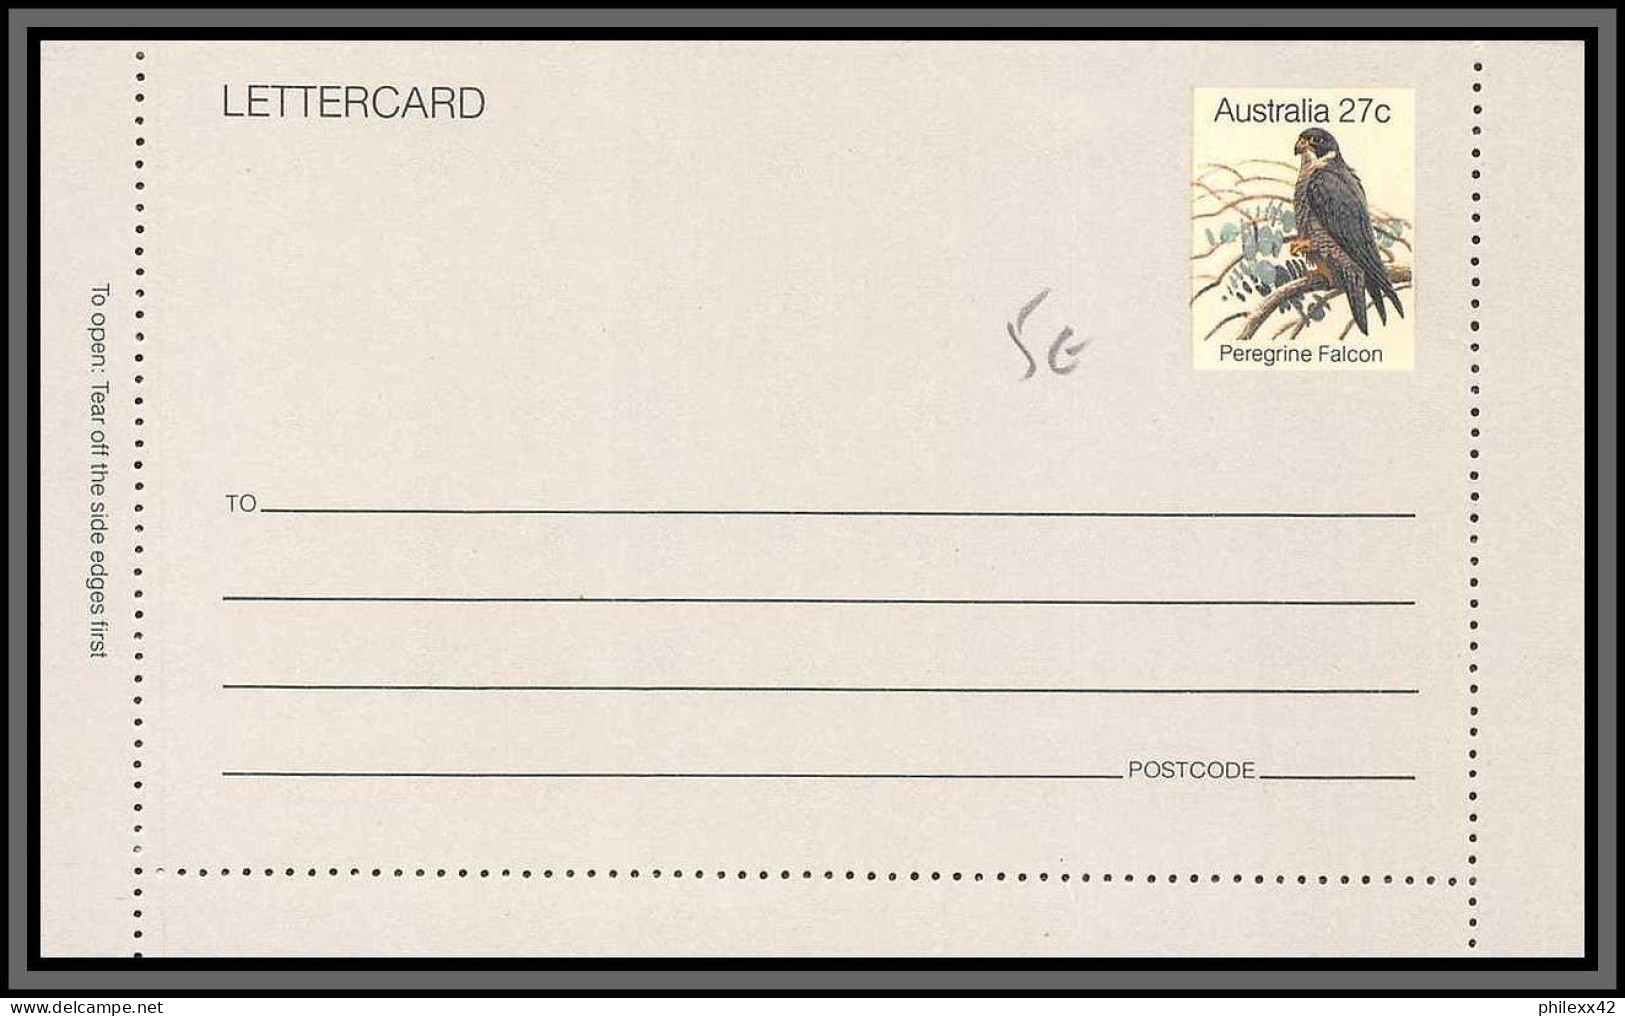 11247 PEREGRINE FALCON Faucon Pèlerin Neuf Tb Entier Stationery Letter Card Australie Australia  - Entiers Postaux